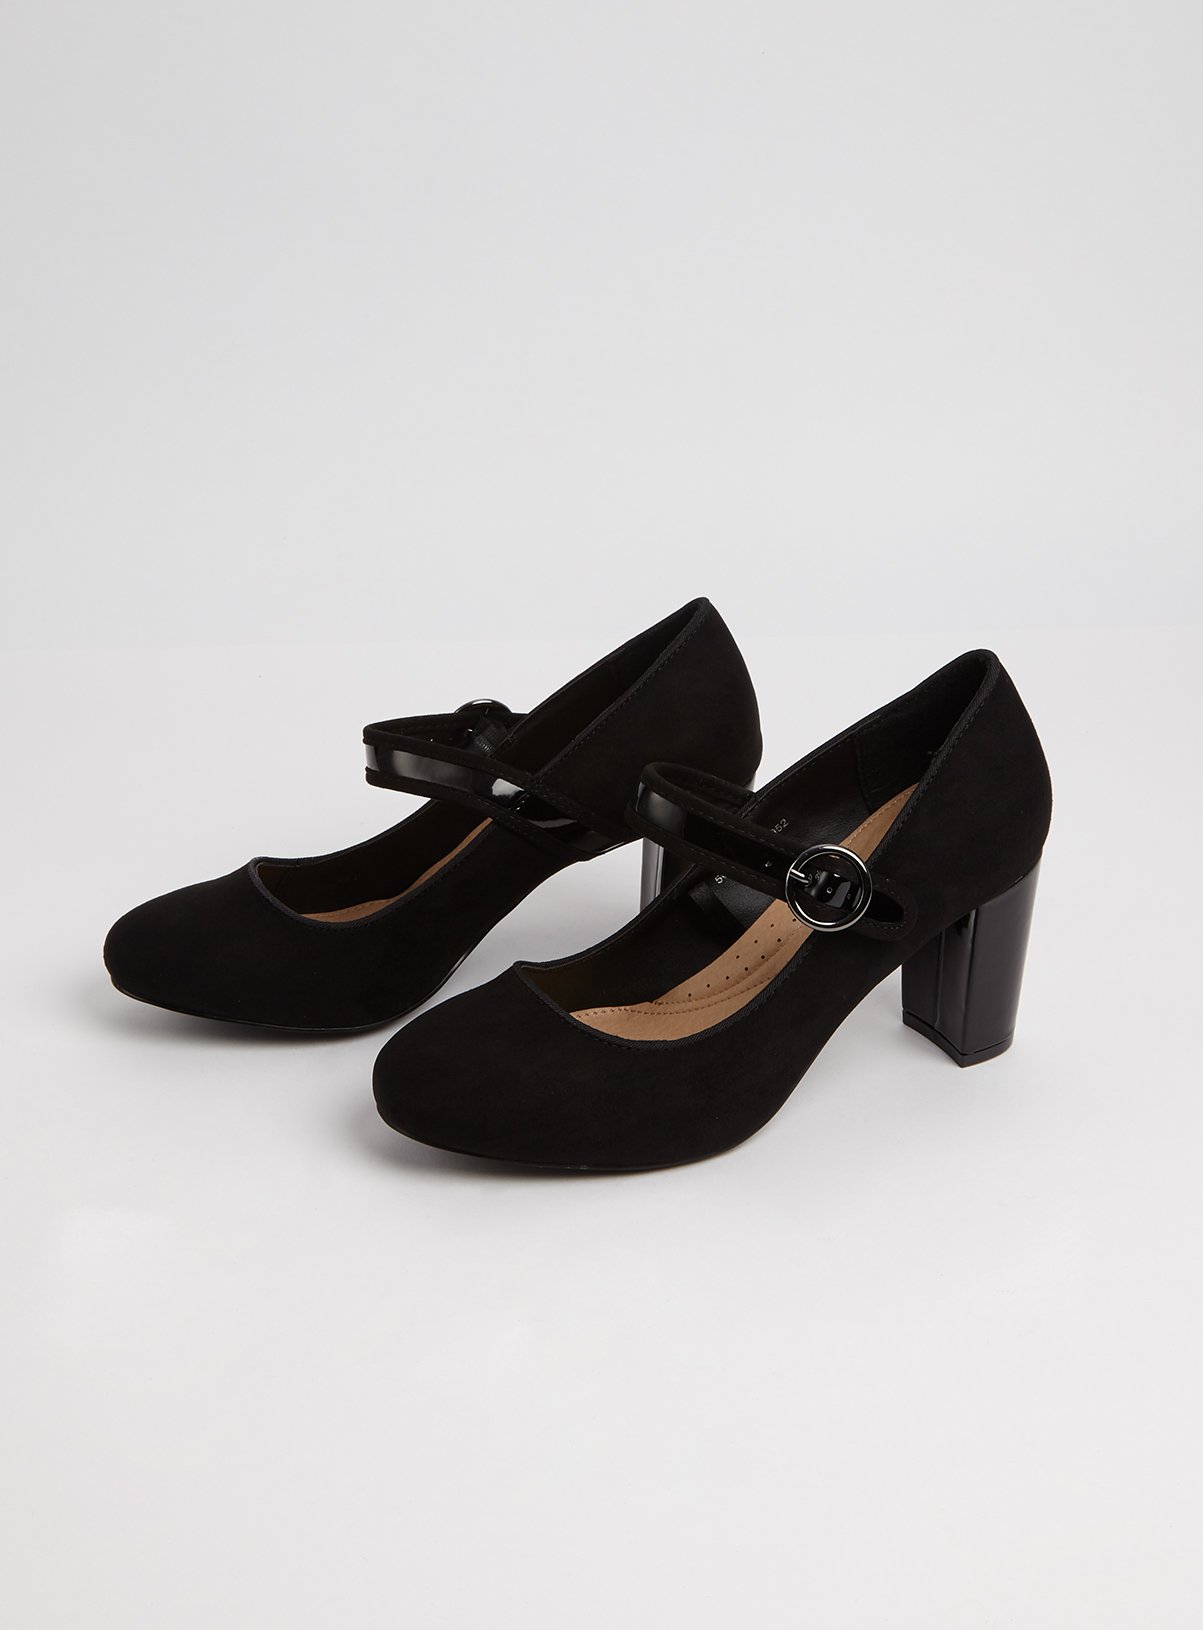 black mary jane court shoes